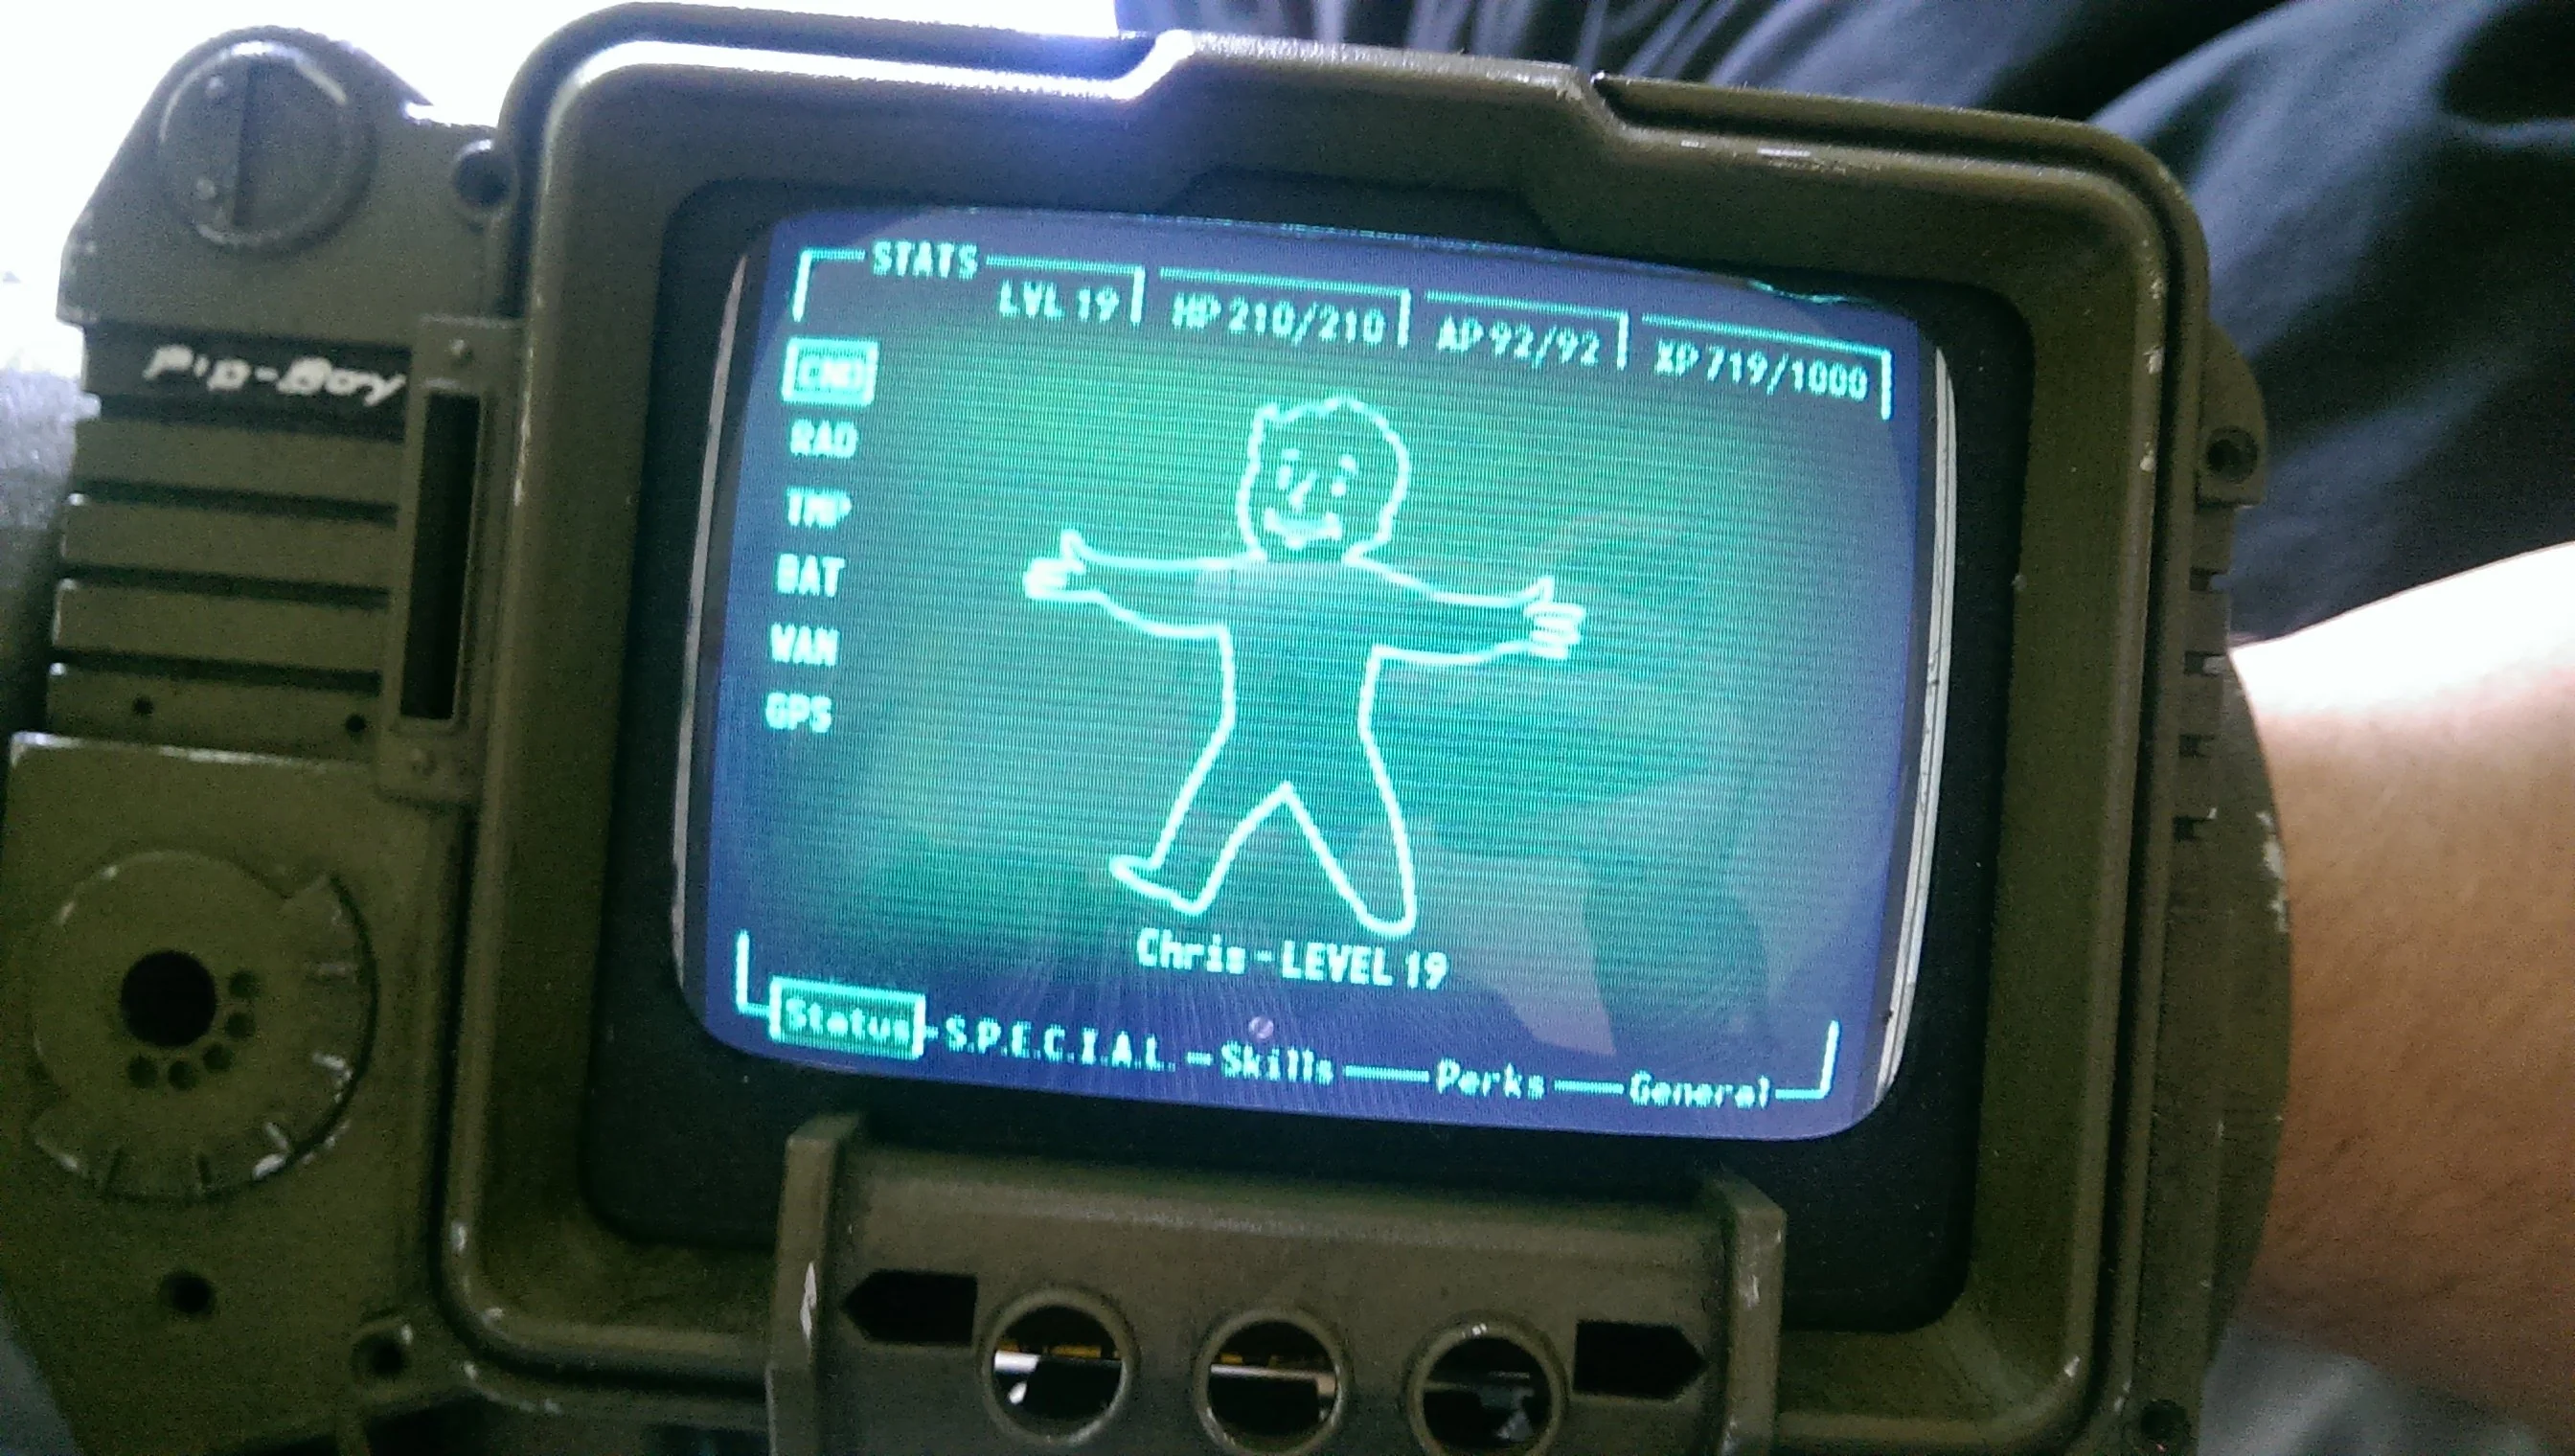 Фанат Fallout сделал PipBoy своими руками - фото 6